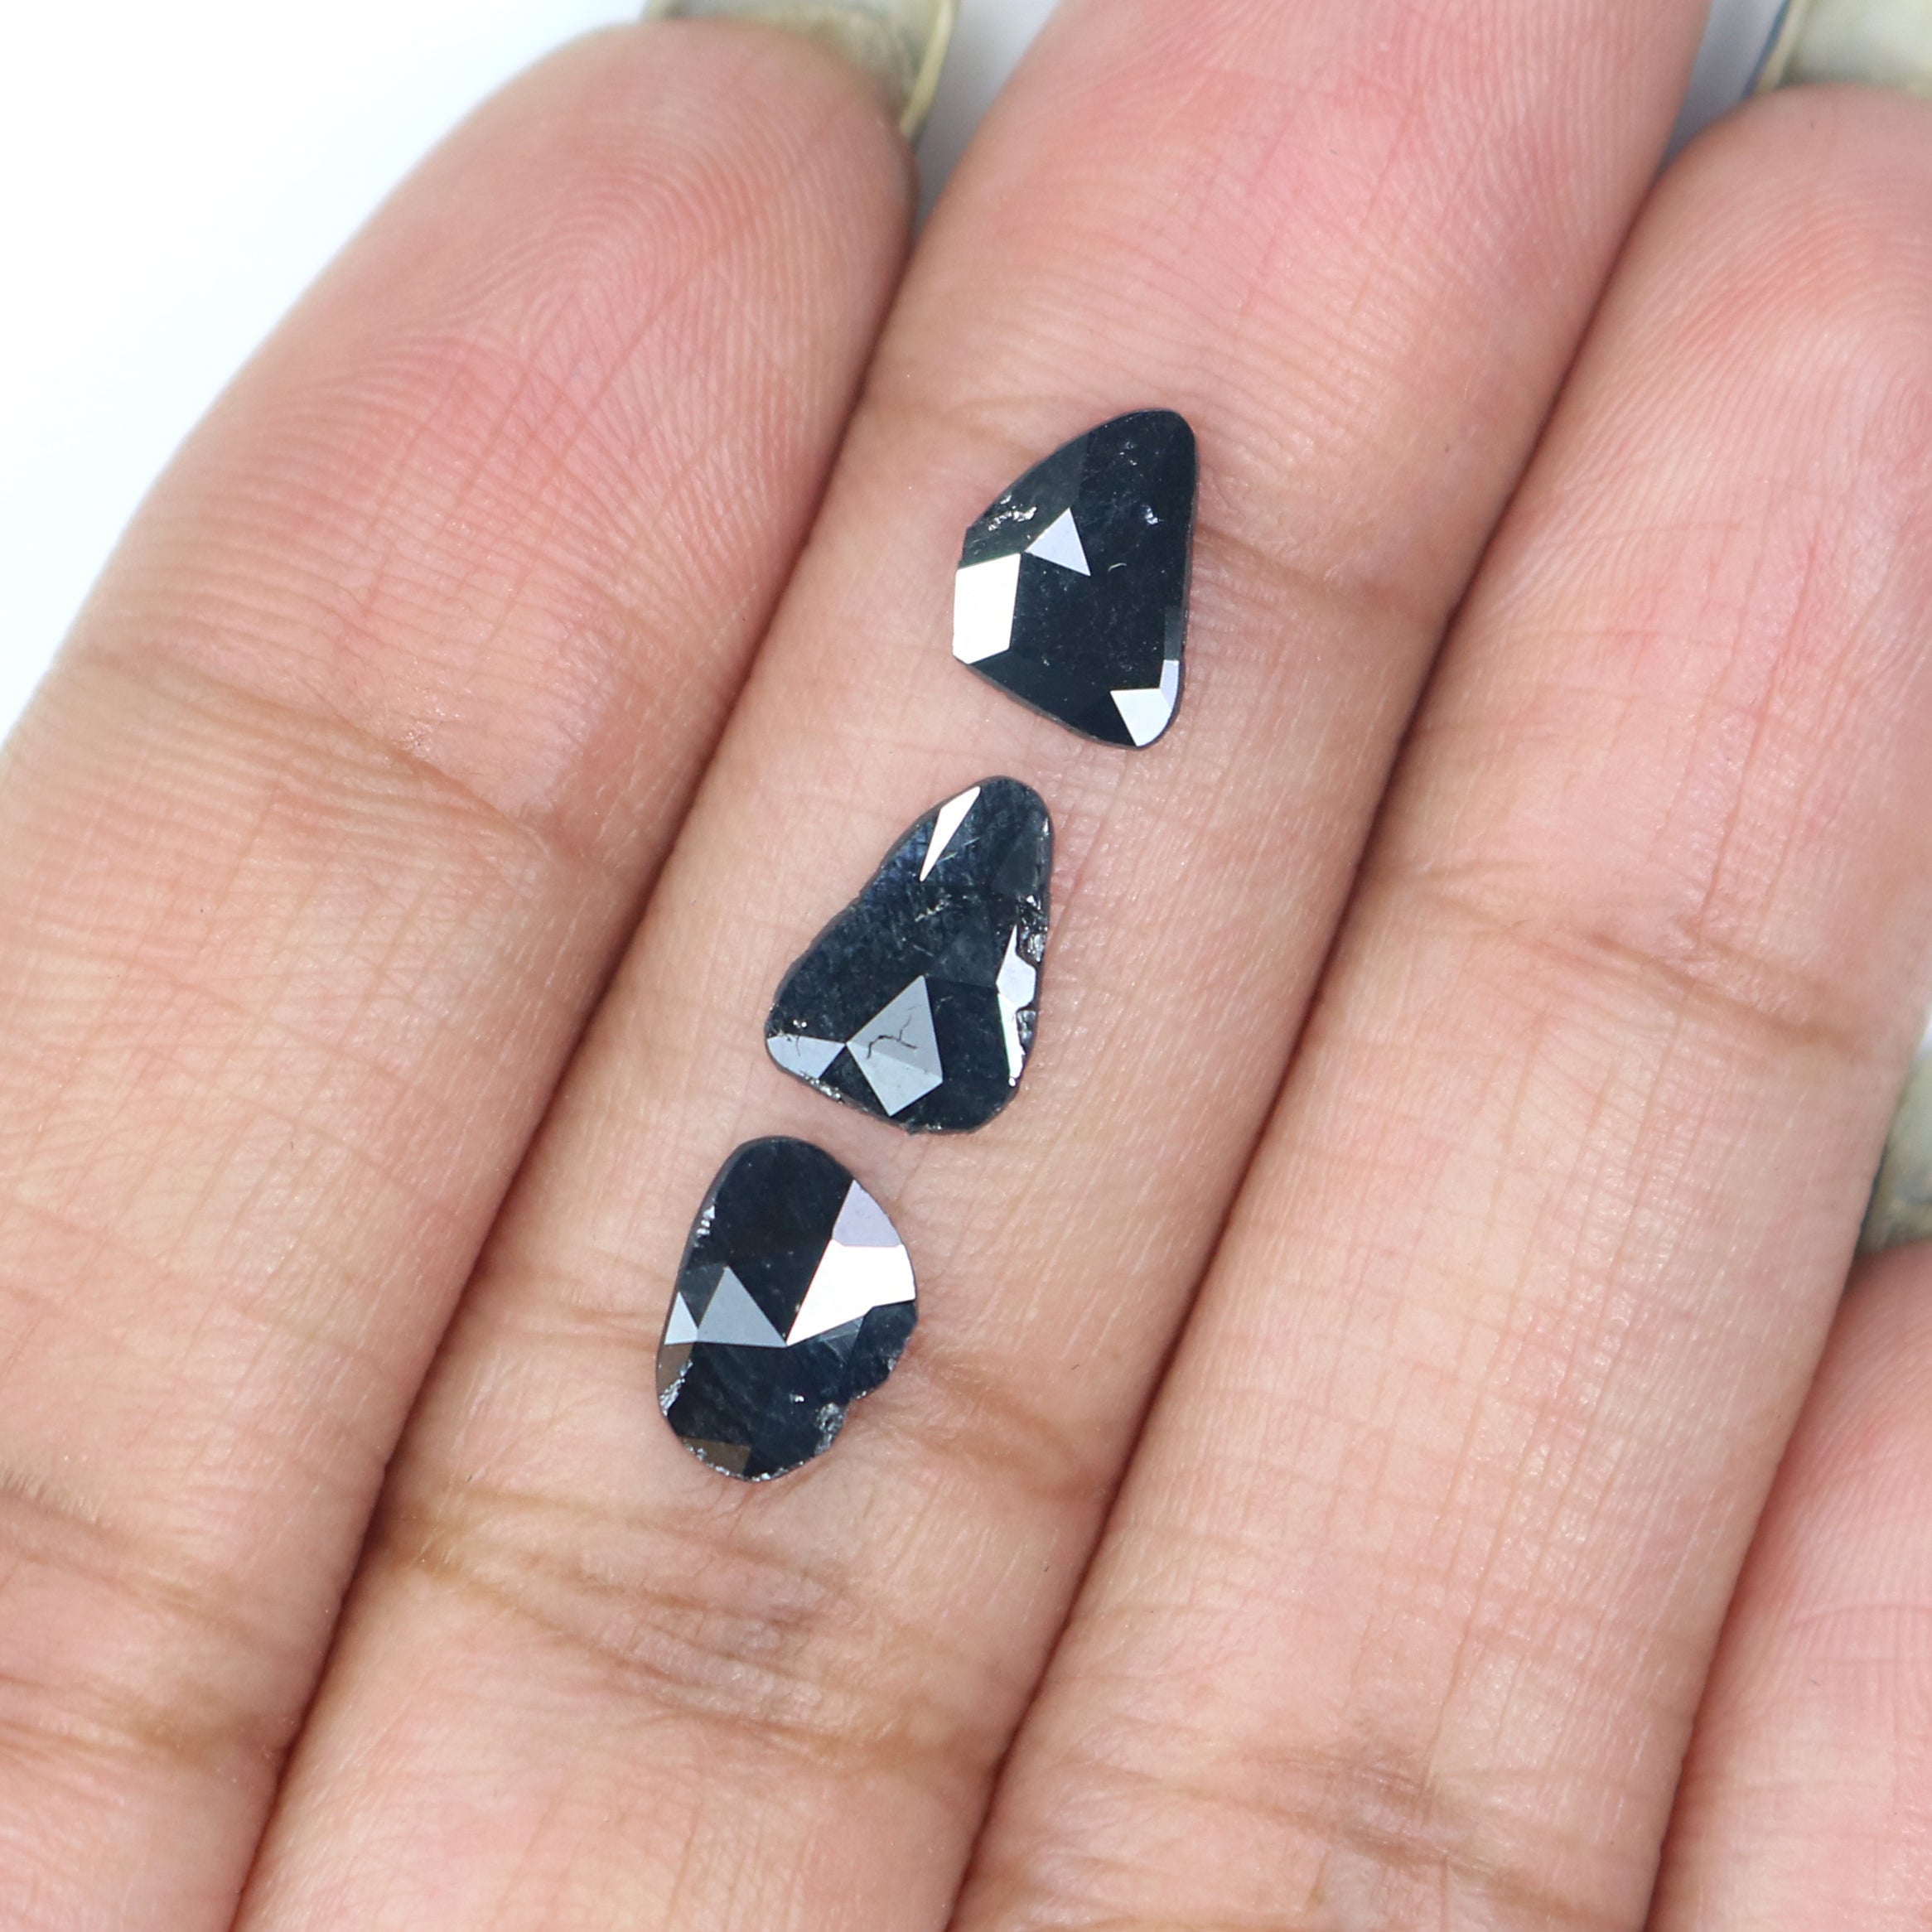 Natural Loose Slice Black Color Diamond 1.27 CT 8.10 MM Slice Shape Rose Cut Diamond KR2600